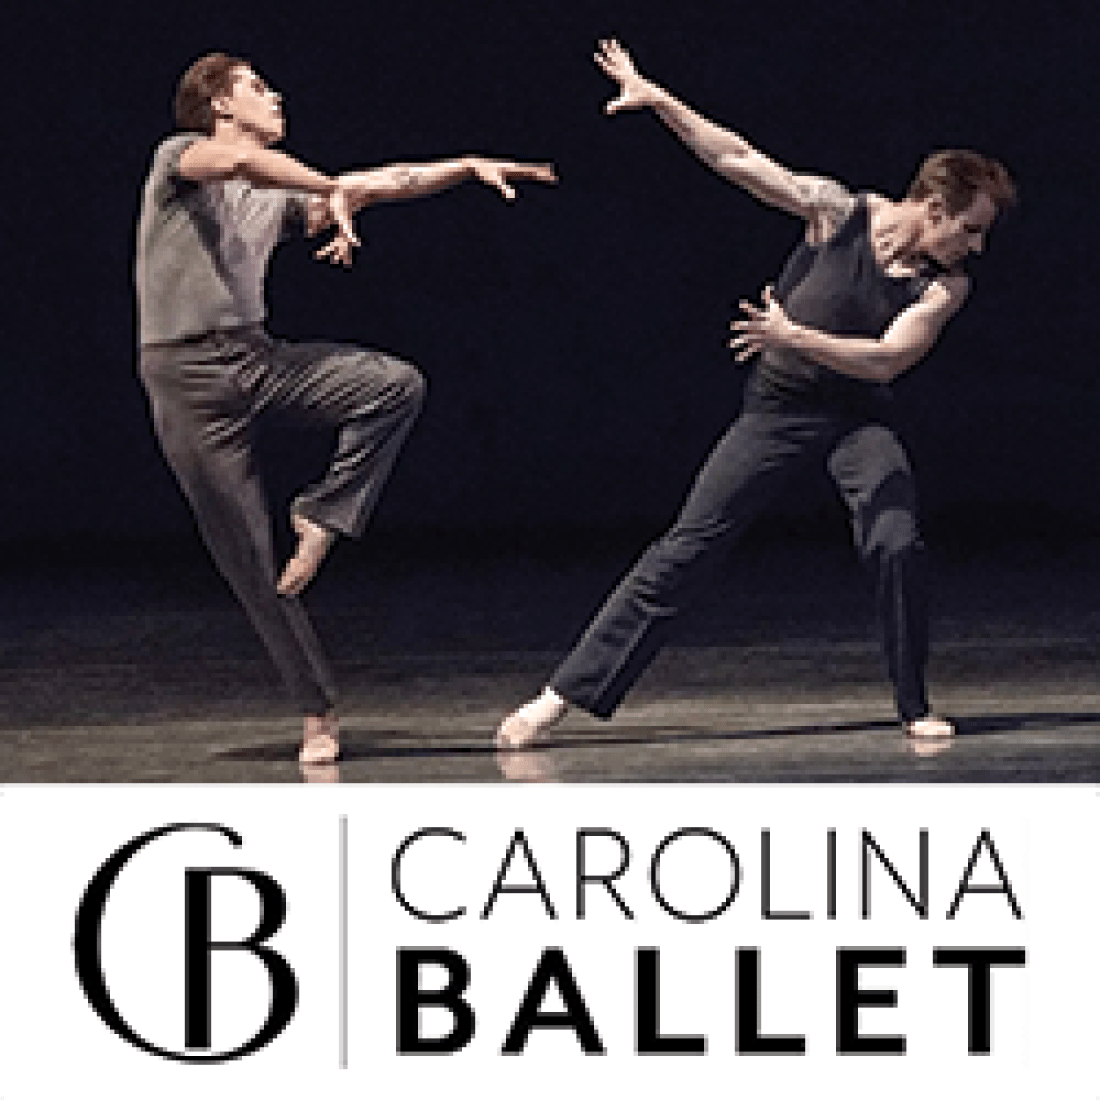 Carolina Ballet logo below two male dancers